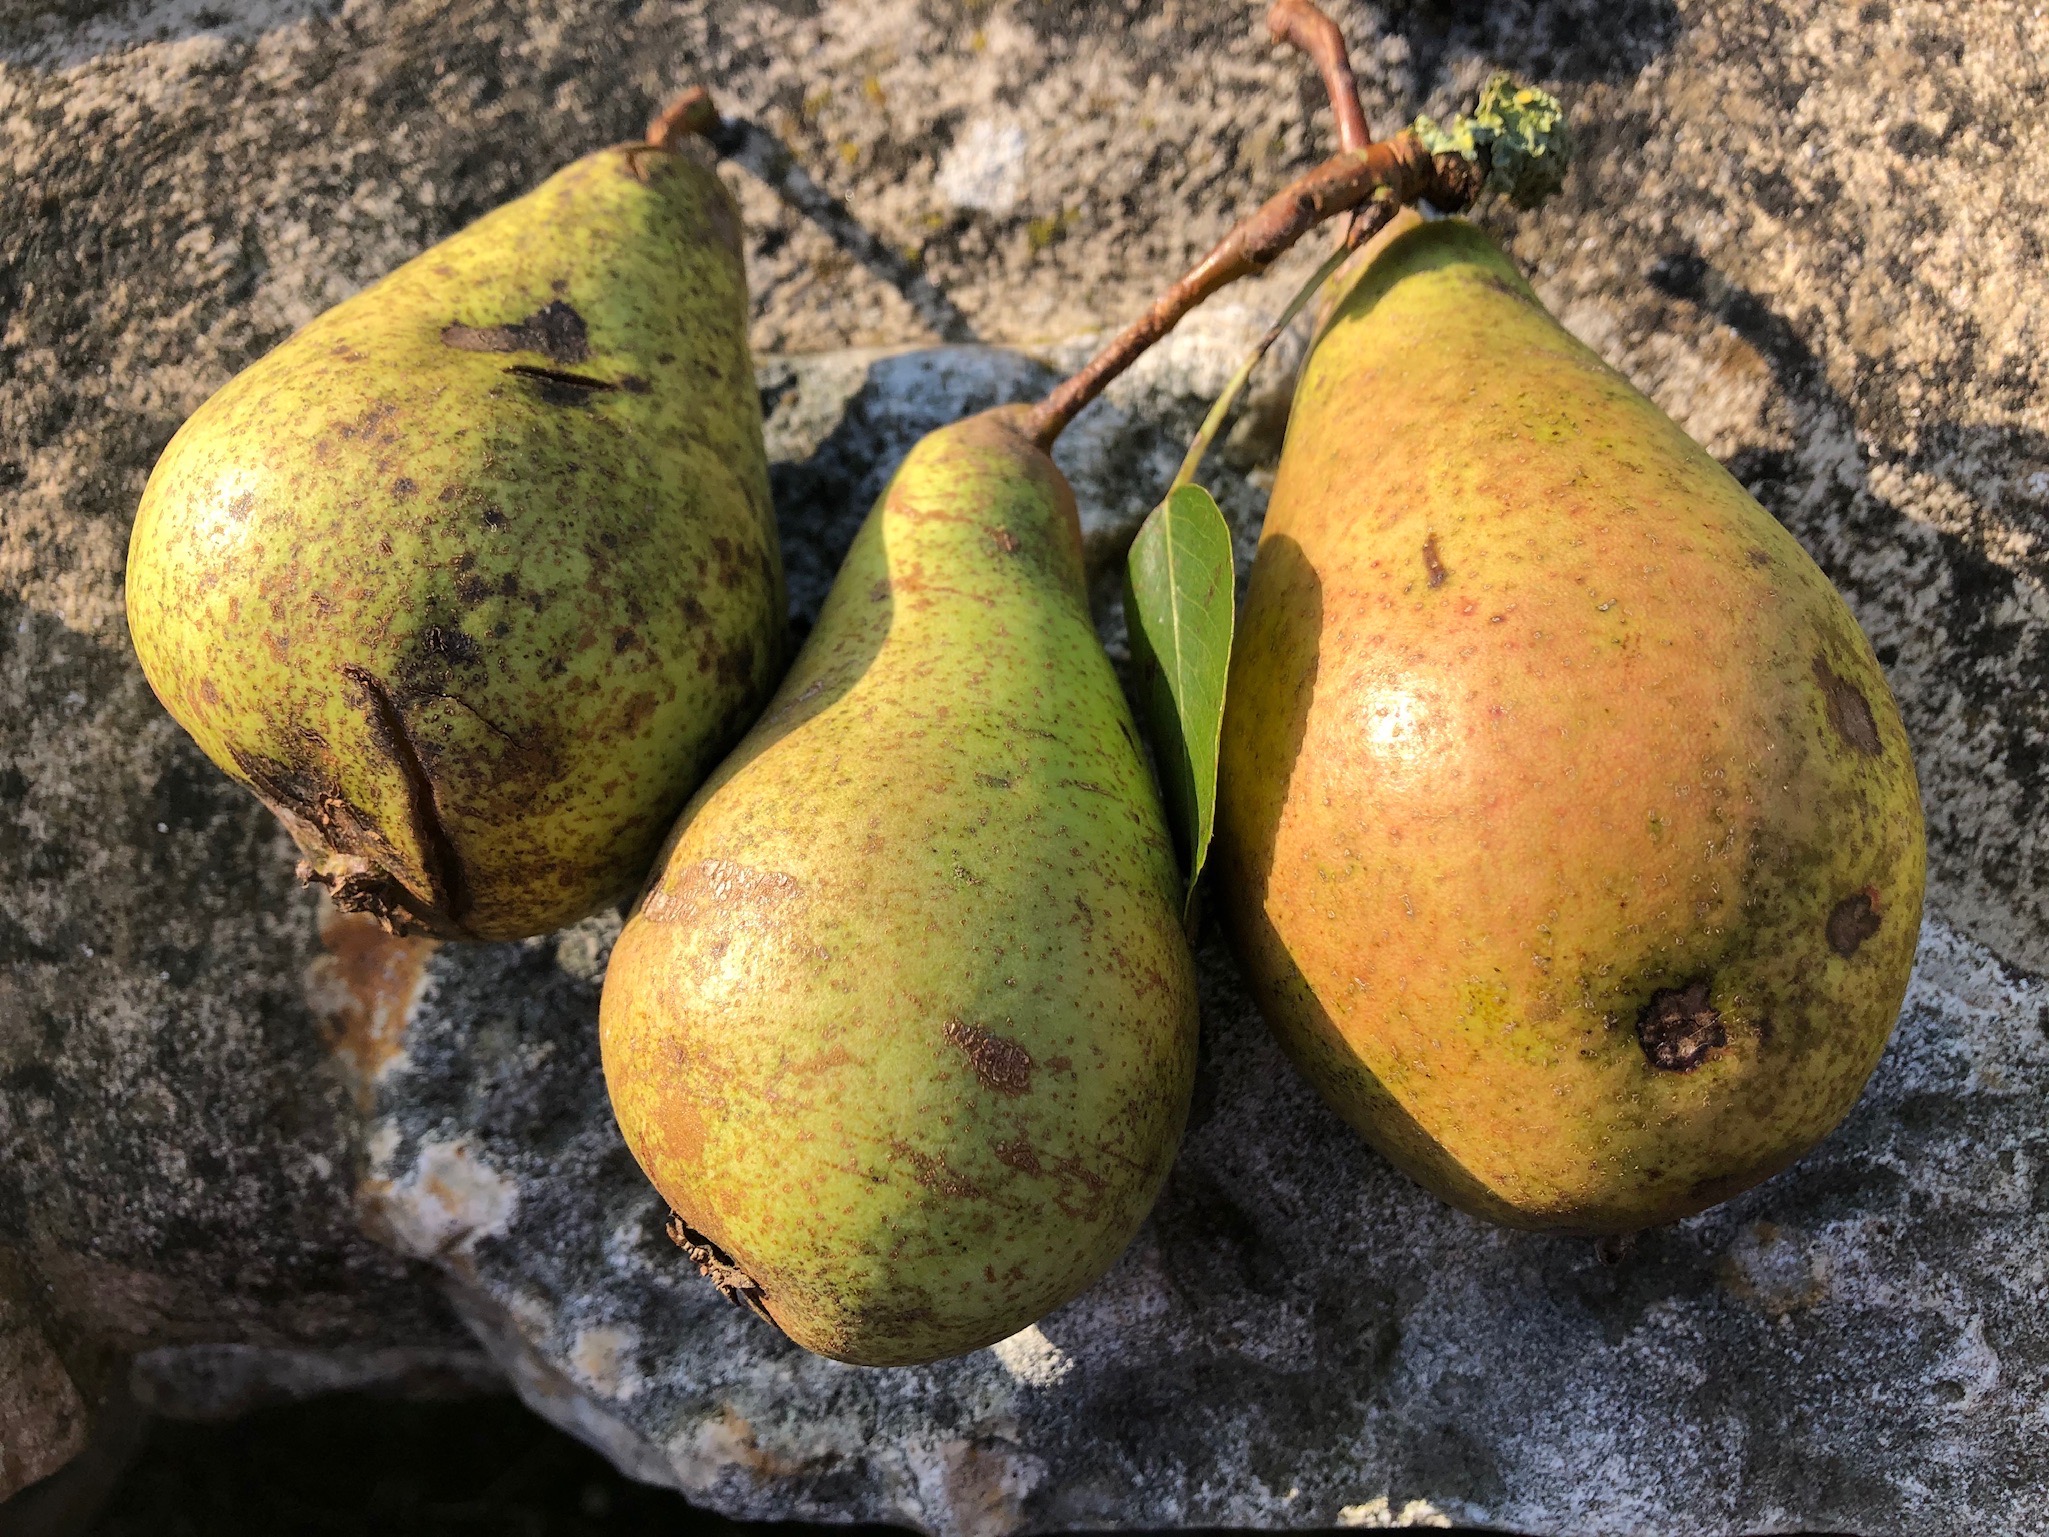 A Devon pear tree ripe with mystery